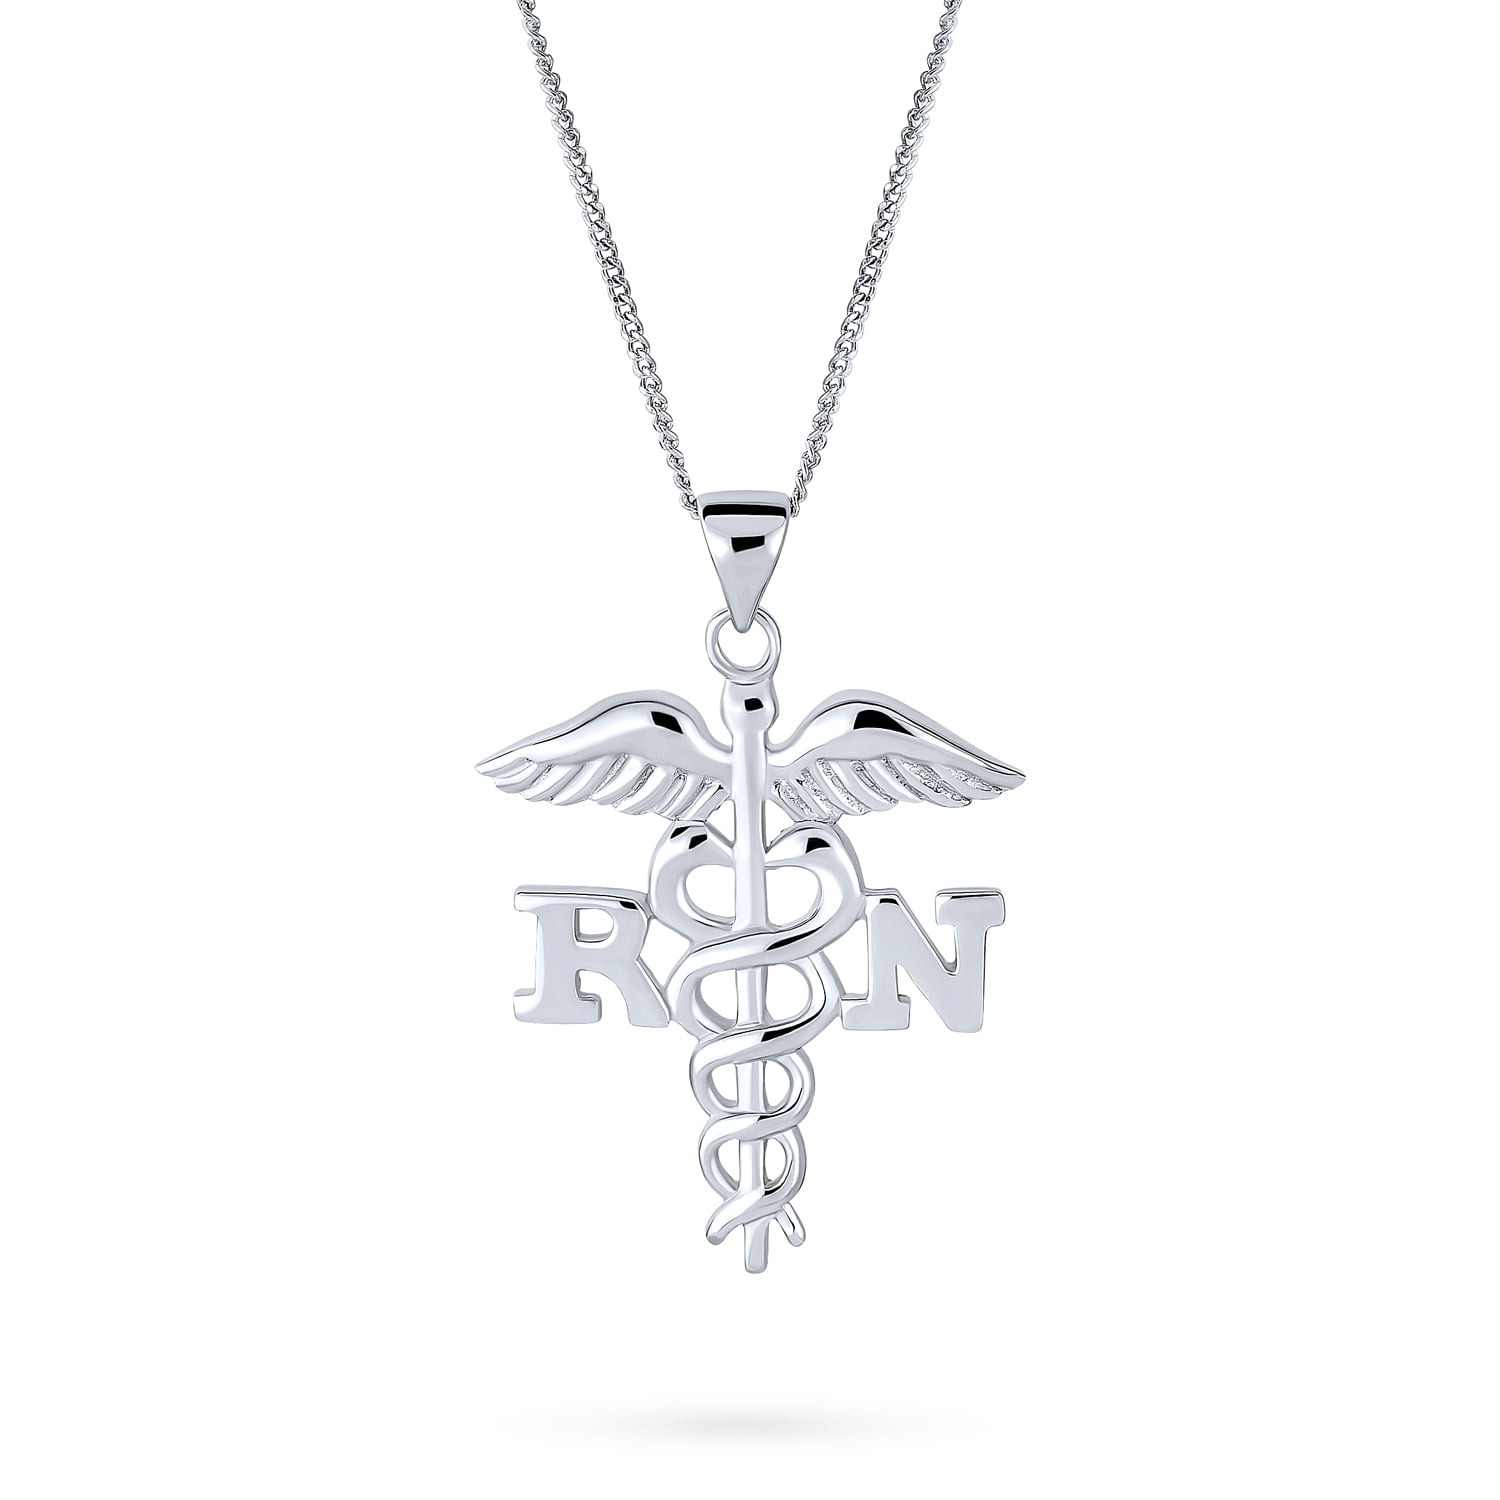 RN chain  RN & Stethescope Necklace charm chain Nurse necklace Registered Nurse